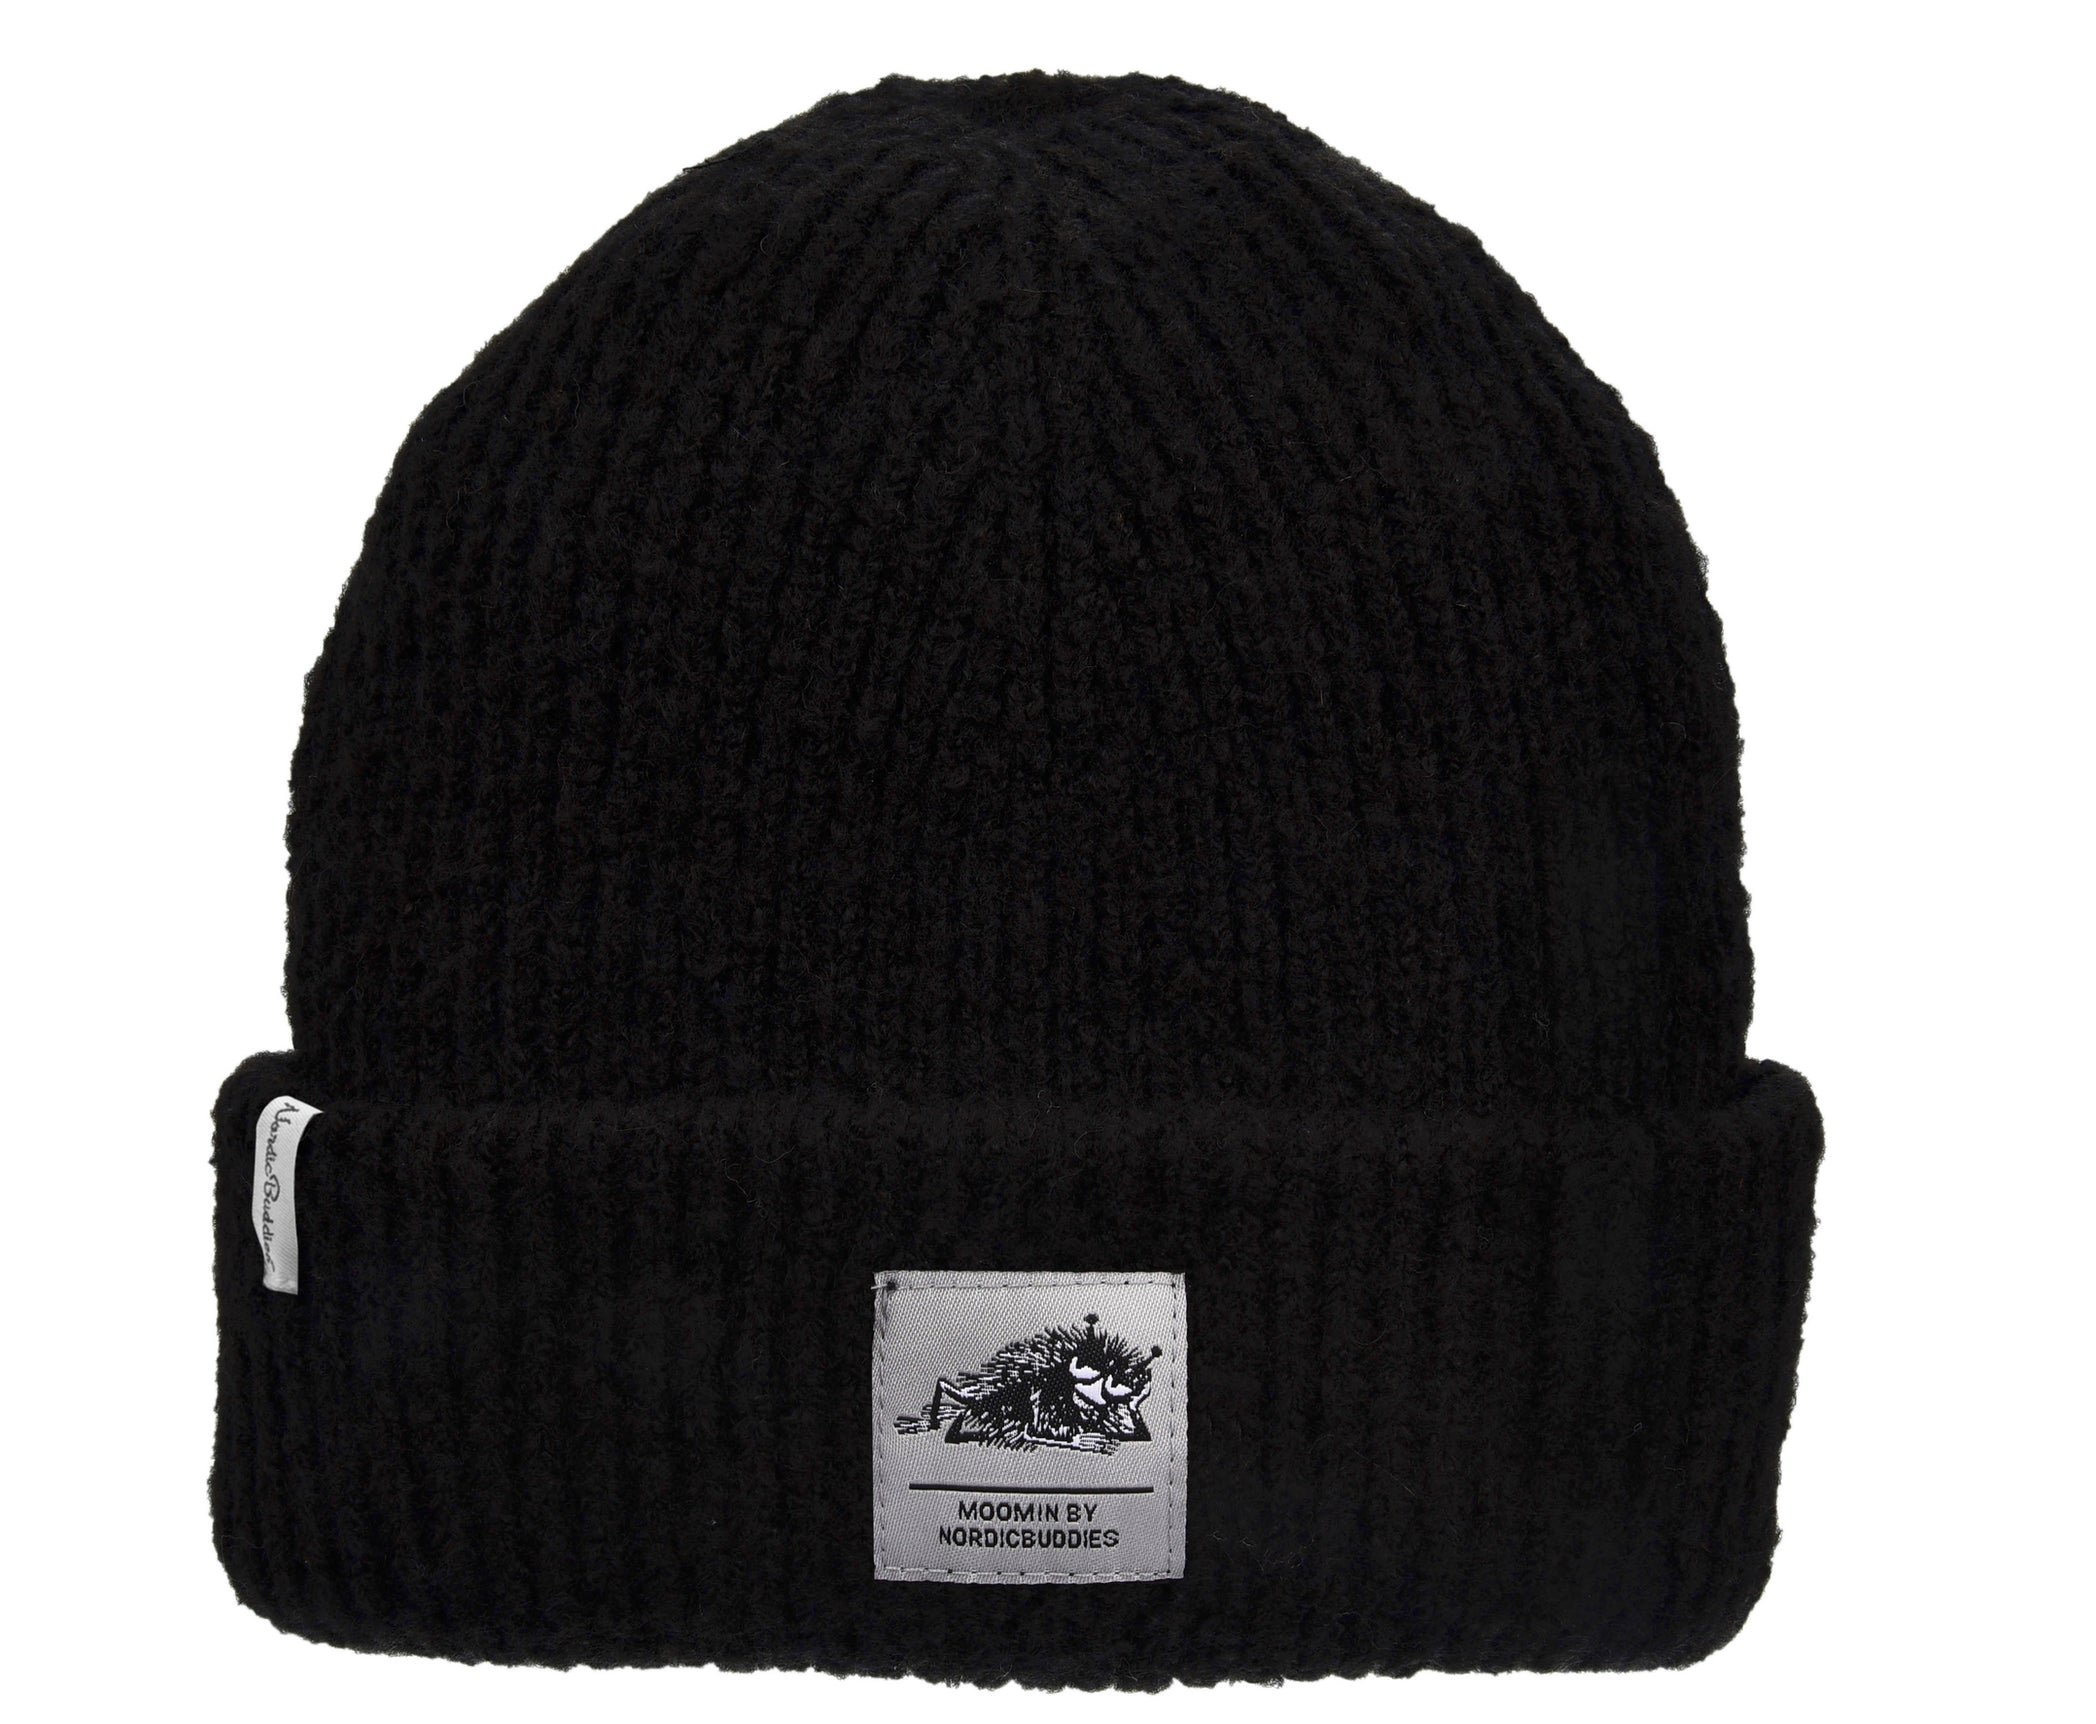 Stinky Winter Hat Beanie Adult - Black